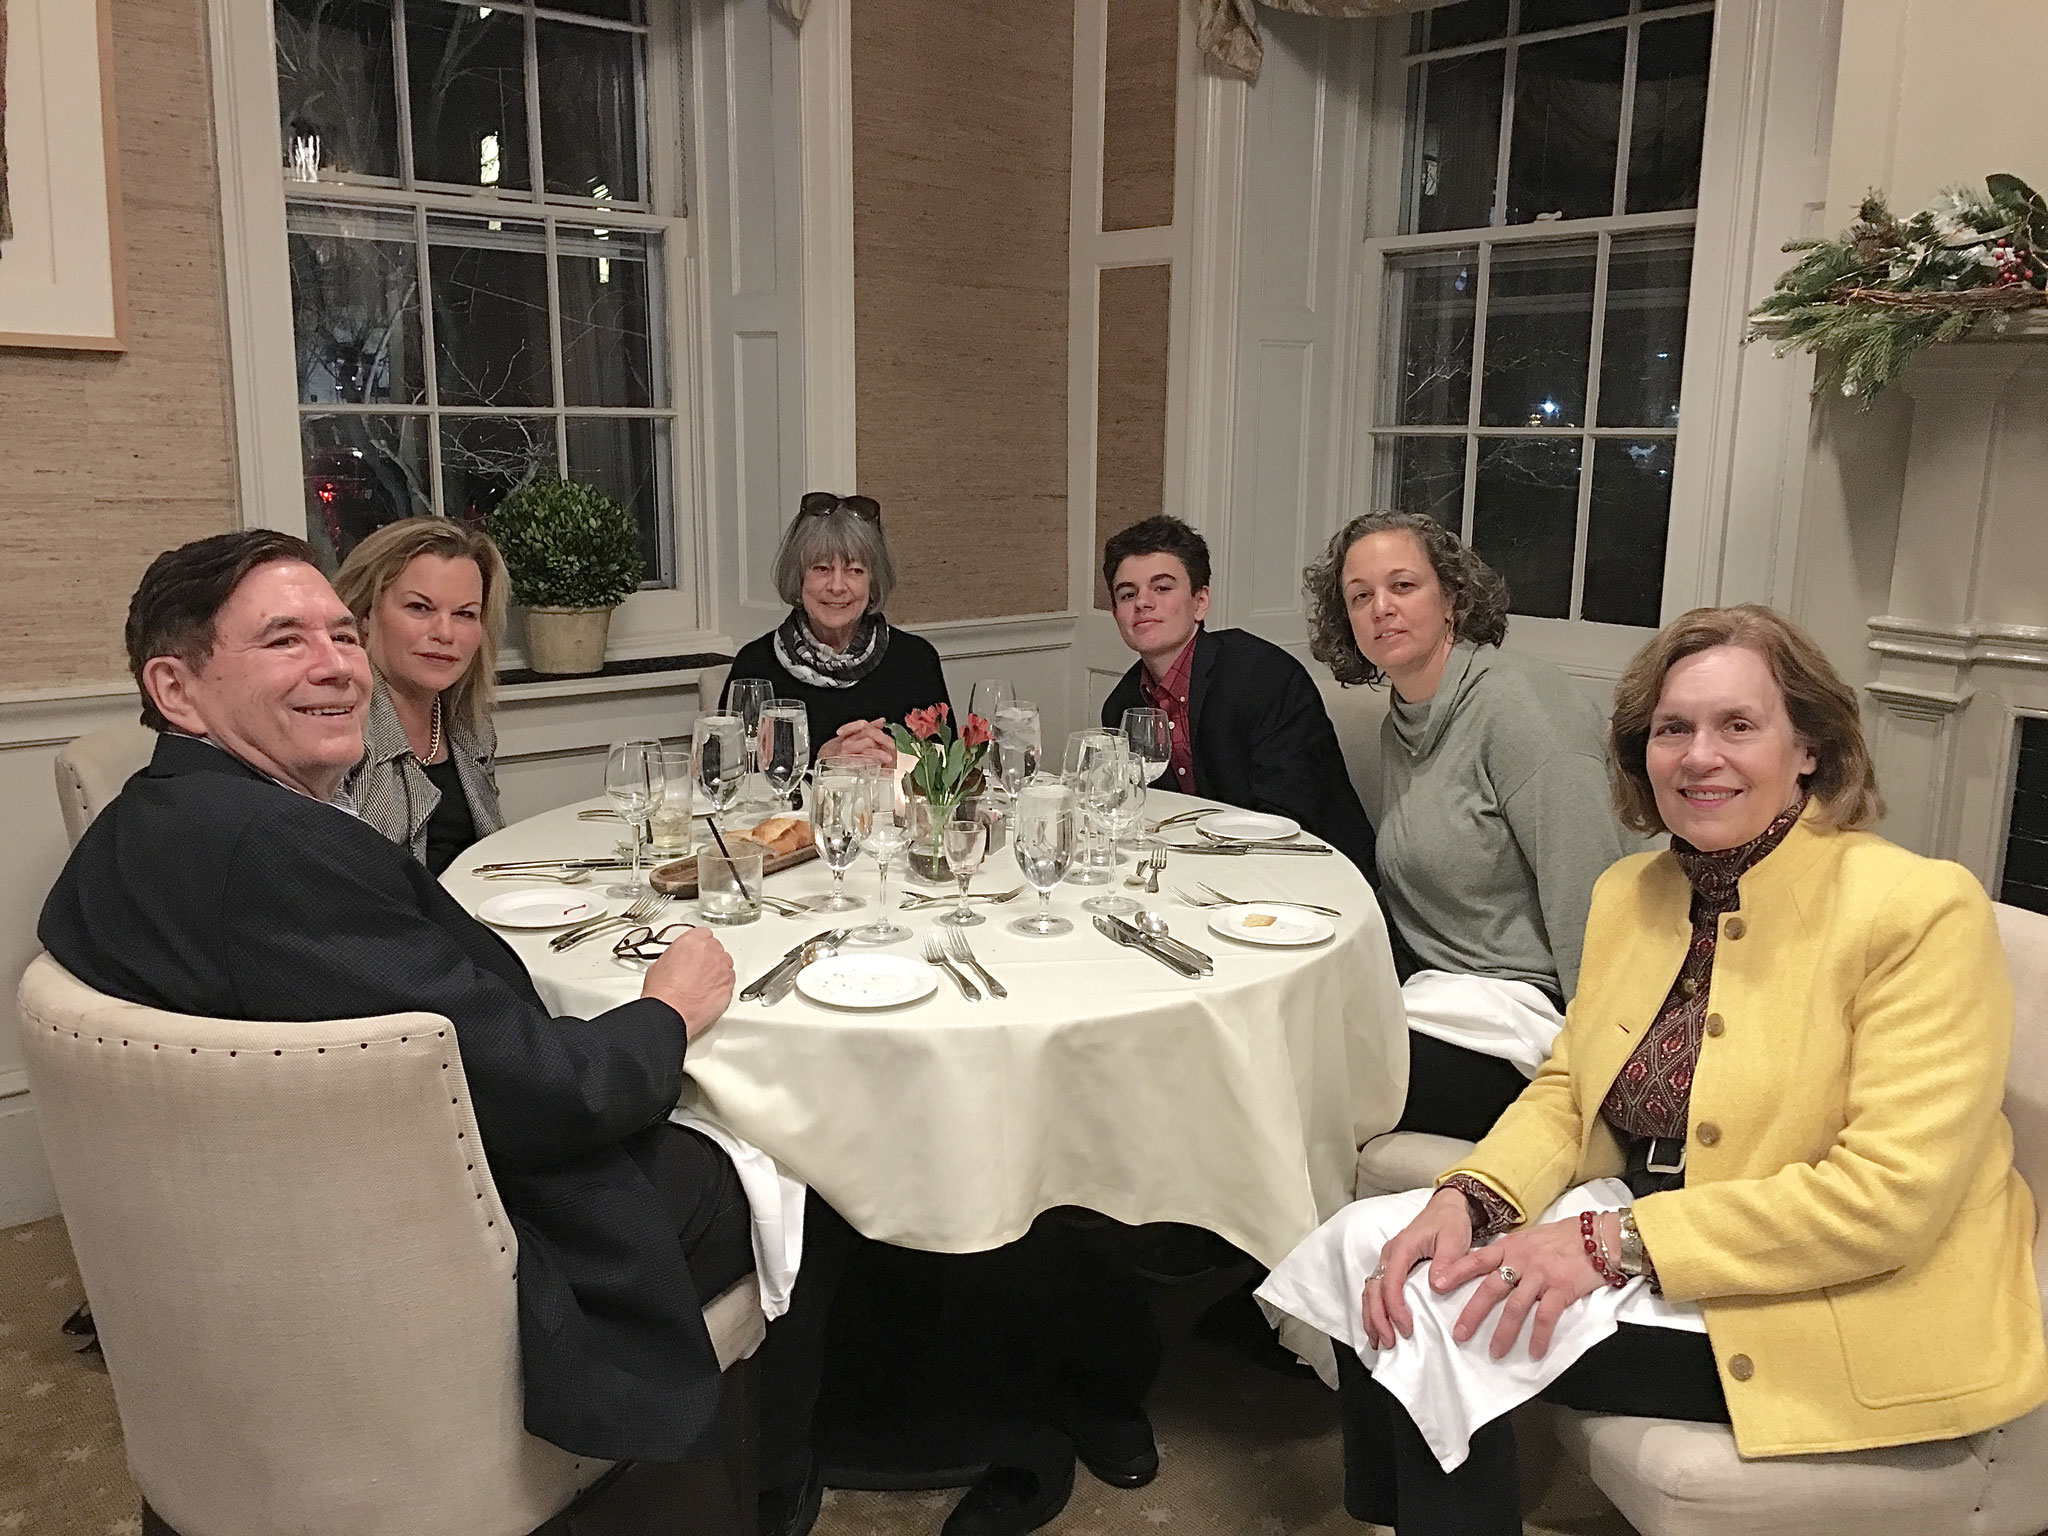 John, Celeste, Kathy Kagel Hutchins, Liz & her son, Lorraine, dining in Princeton, NJ Feb. 2020